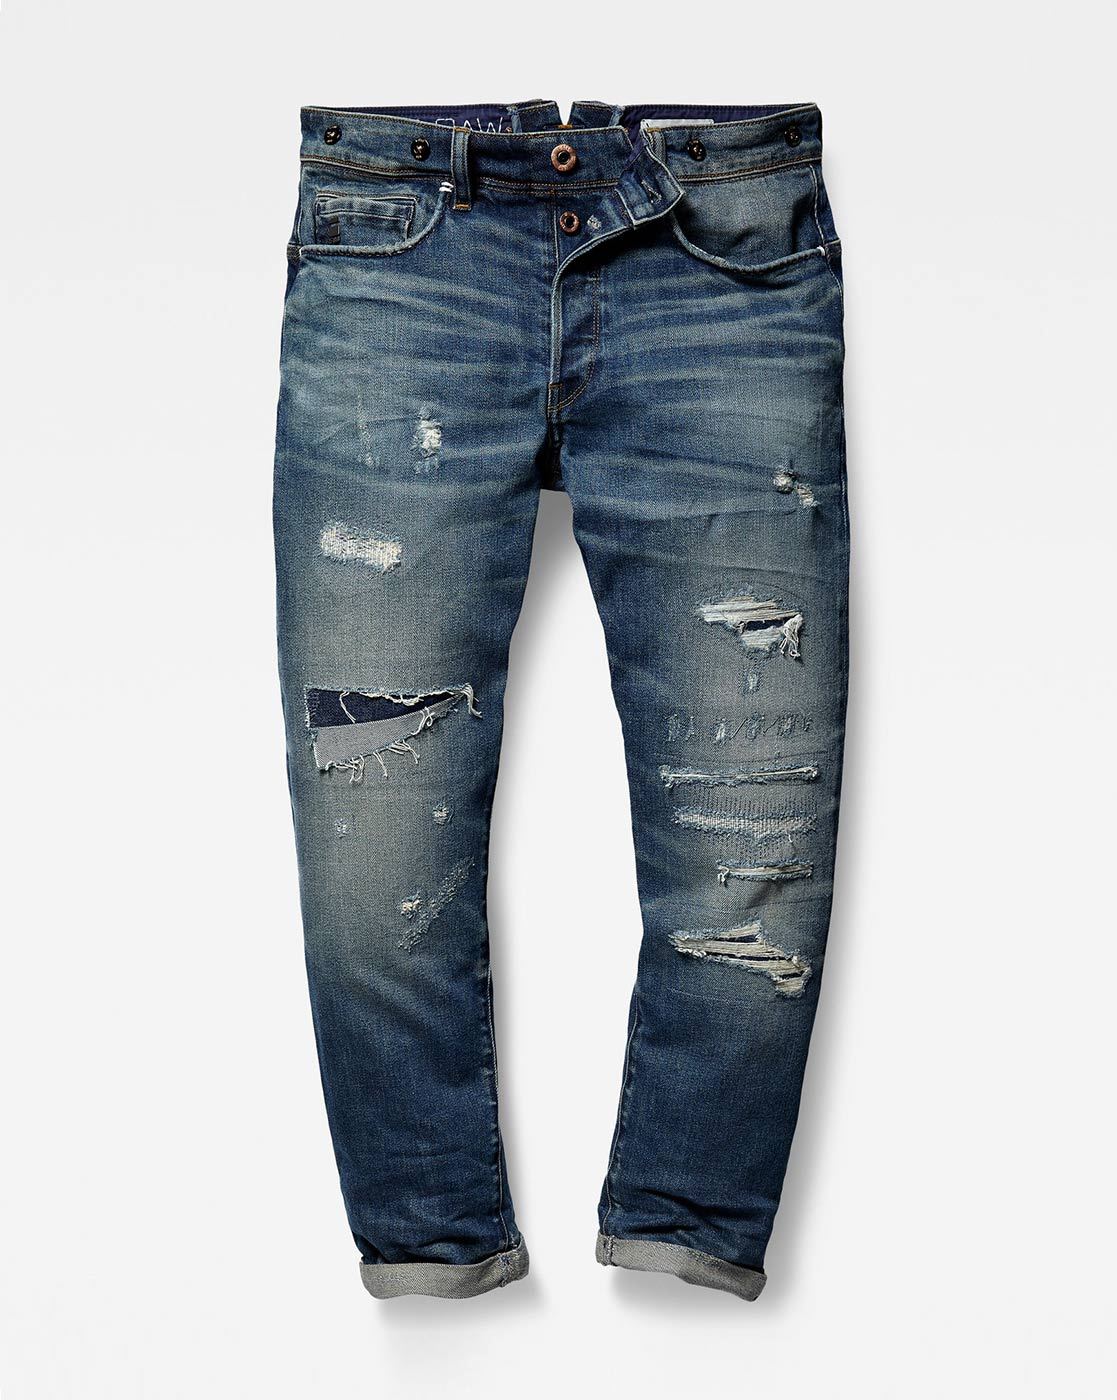 Buy Jeans Men by G STAR Online | Ajio.com